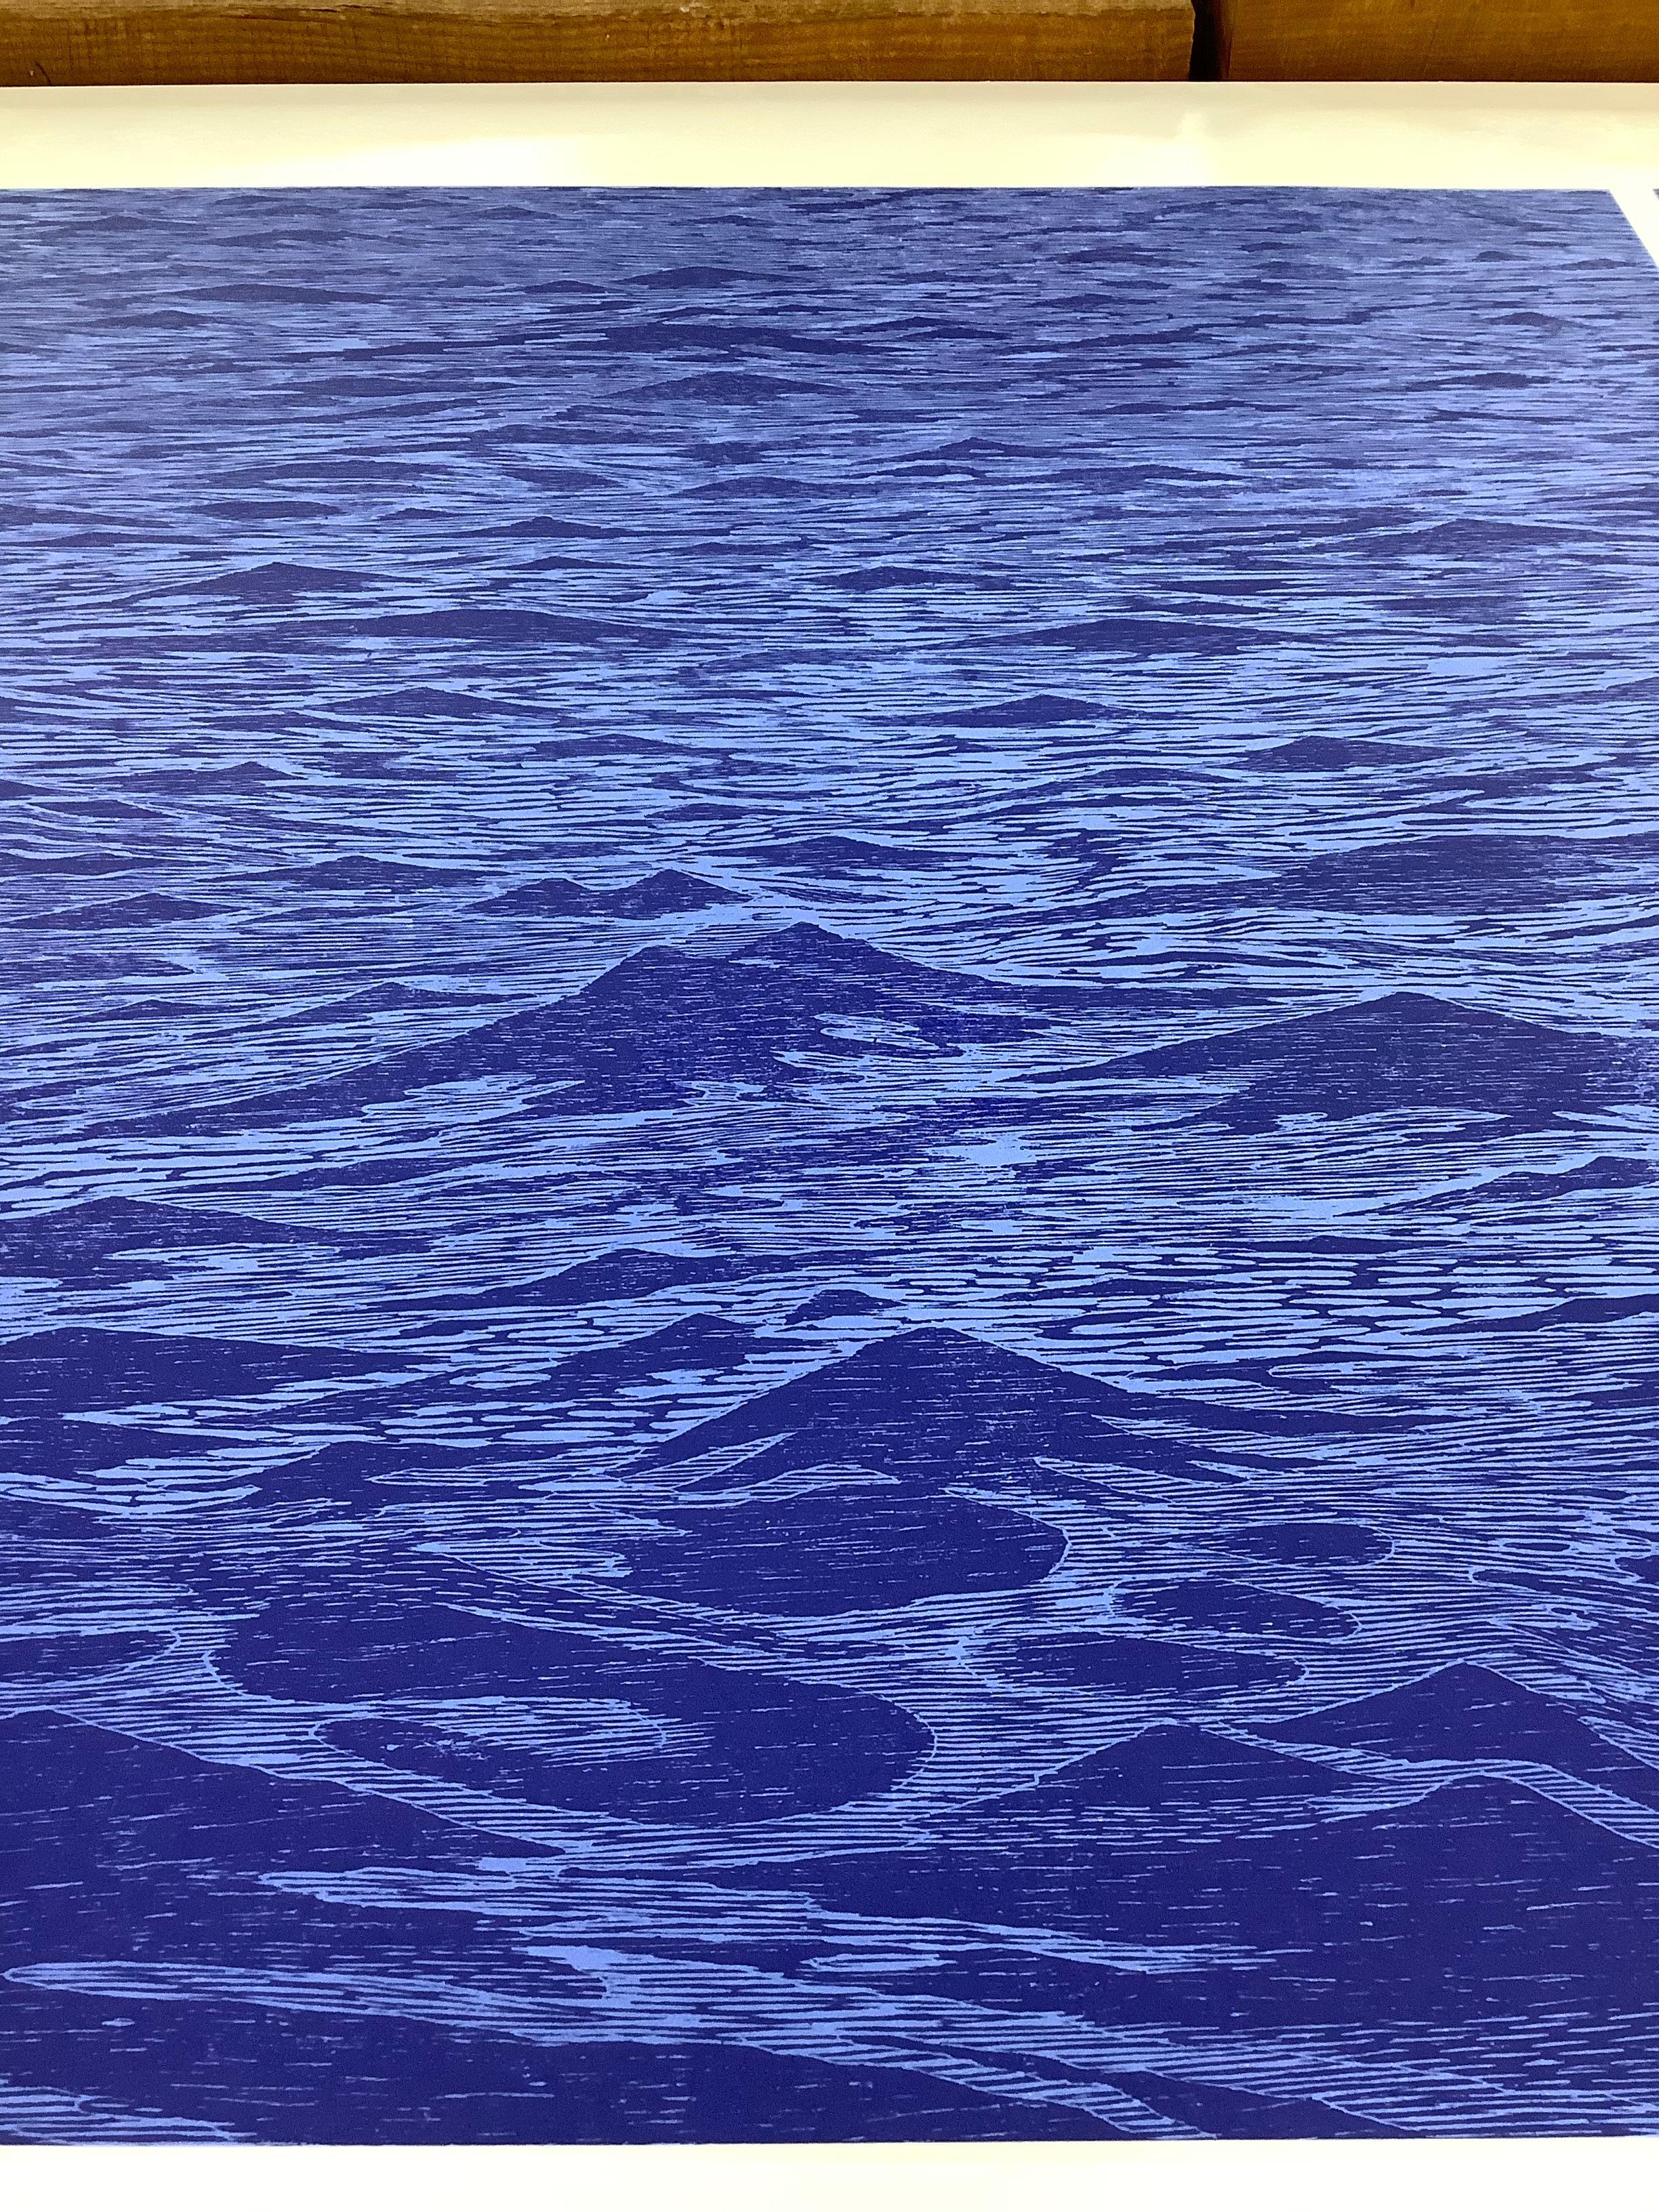 Seascape Diptych Six, Cobalt Blue Horizontal Seascape, Waves Woodcut Print   For Sale 4